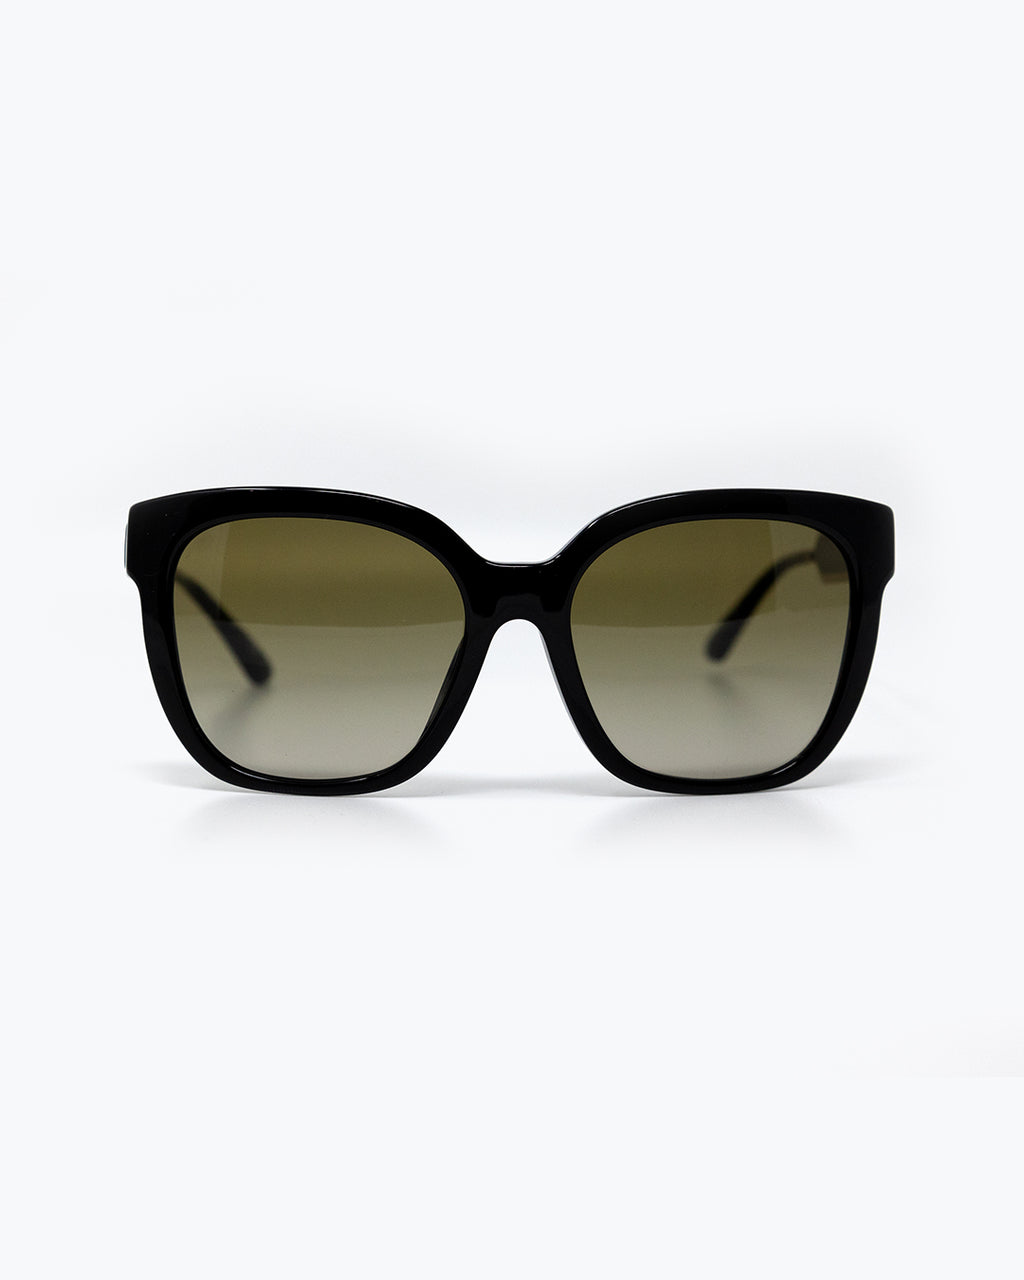 Tory Burch Black Smoke Sunglasses - Model TY7161